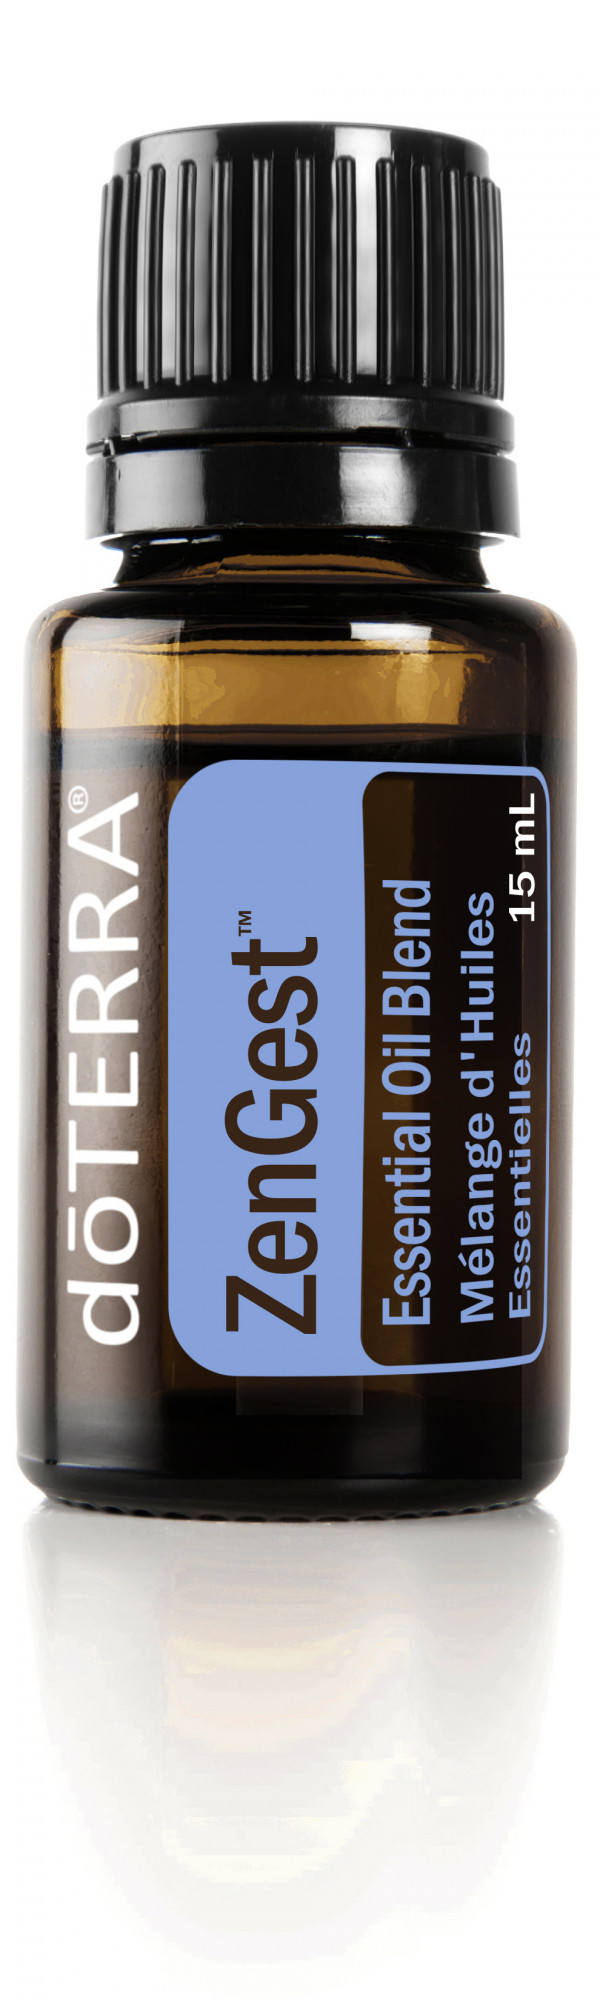 DoTERRA digestive essential oil blend